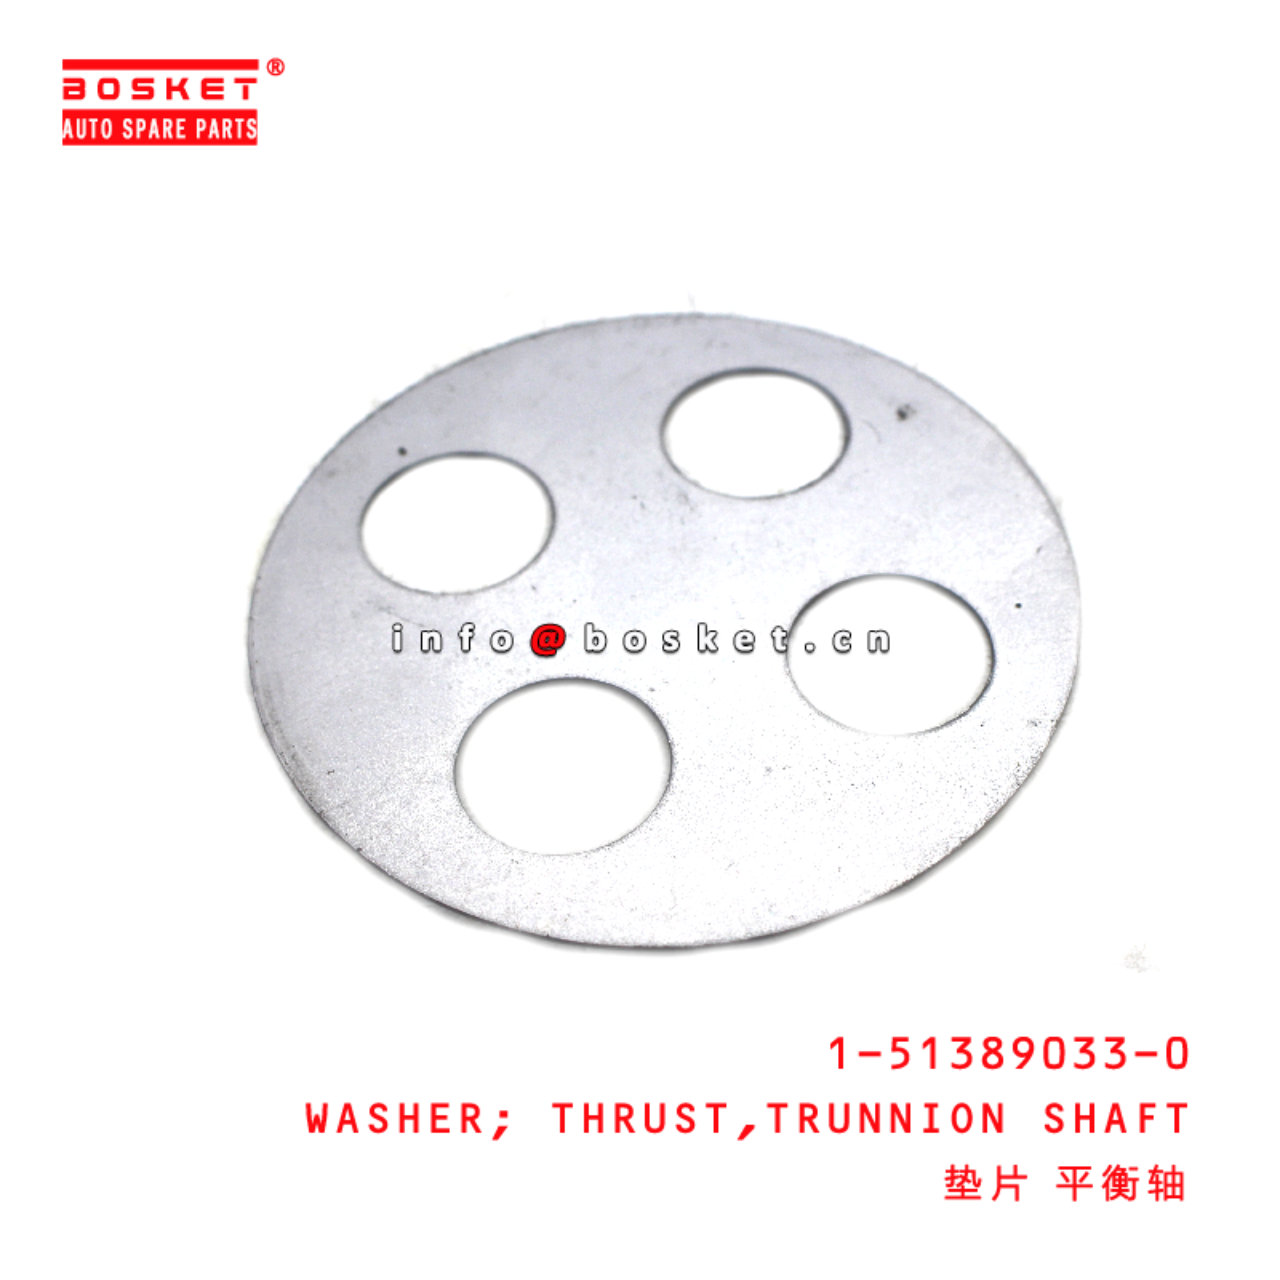 1-51389033-0 Trunnion Shaft Thrust Washer suitable...